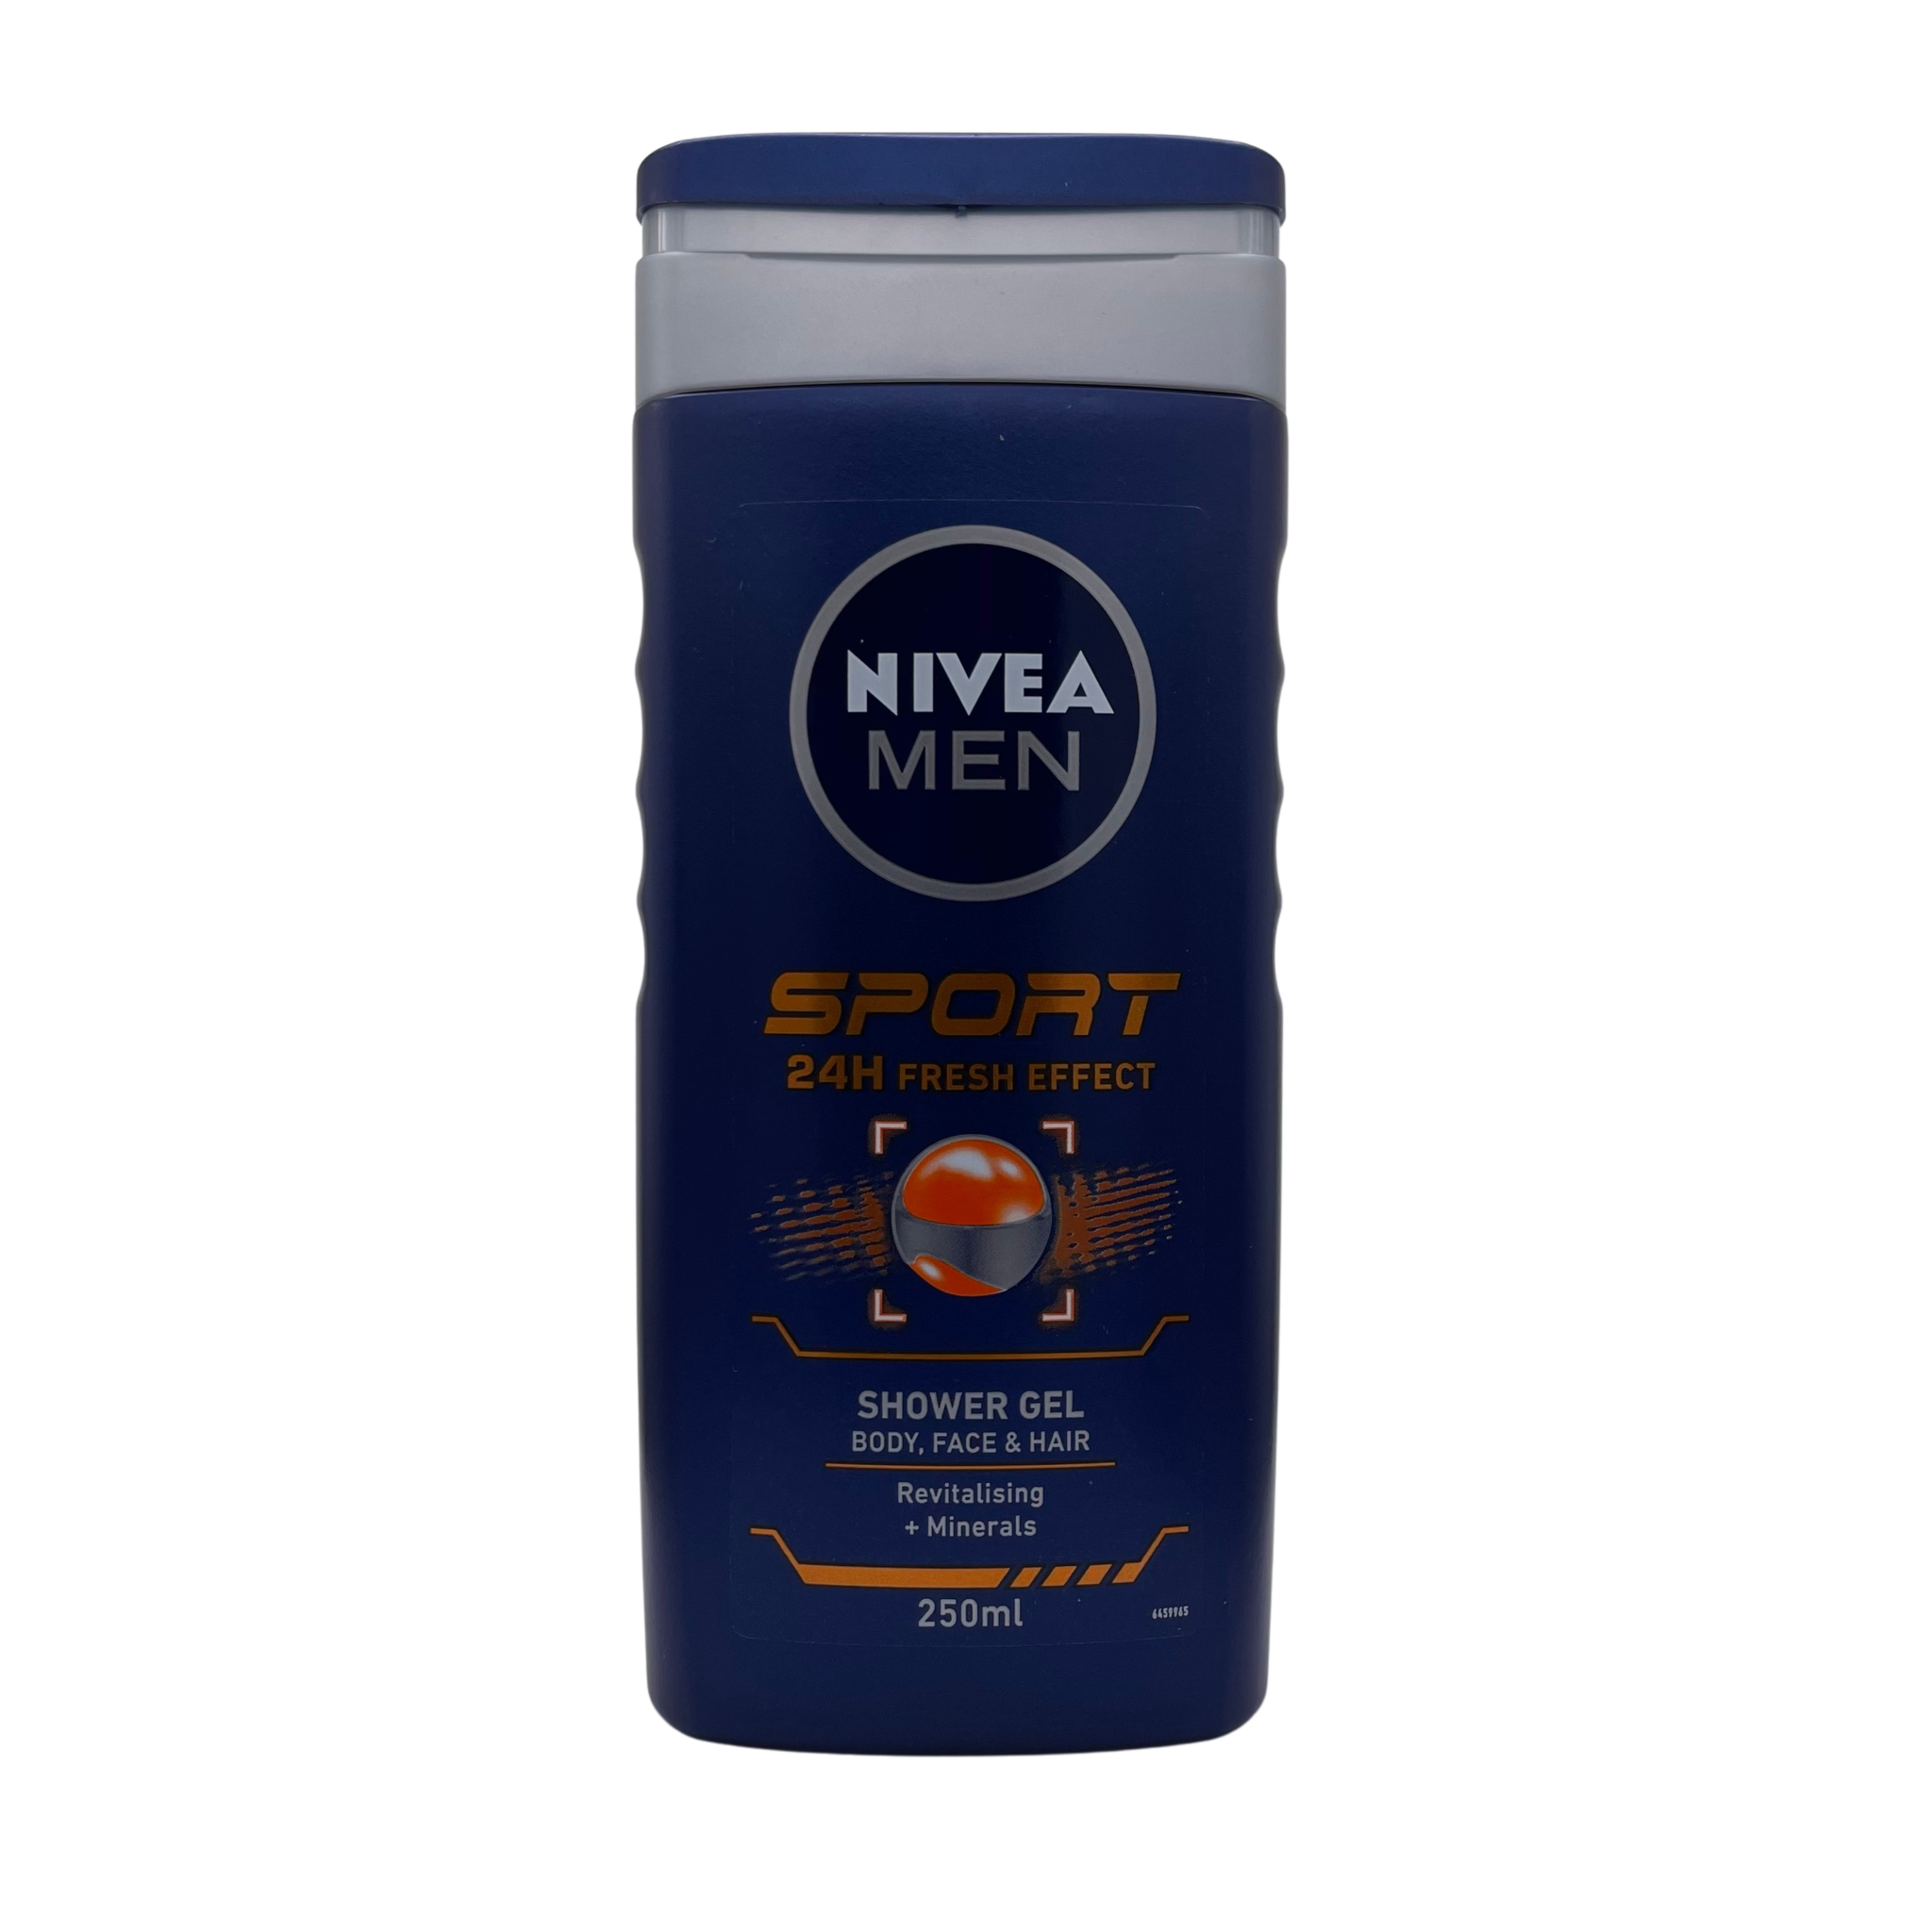 Nivea Men Sport showergel 250ml